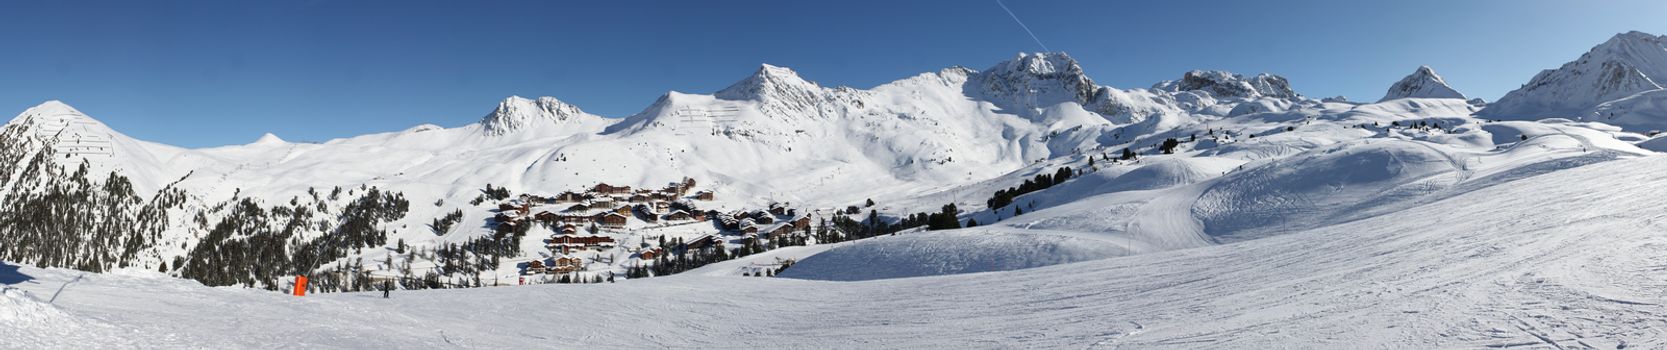 panorama of the ski resort village of la plagne